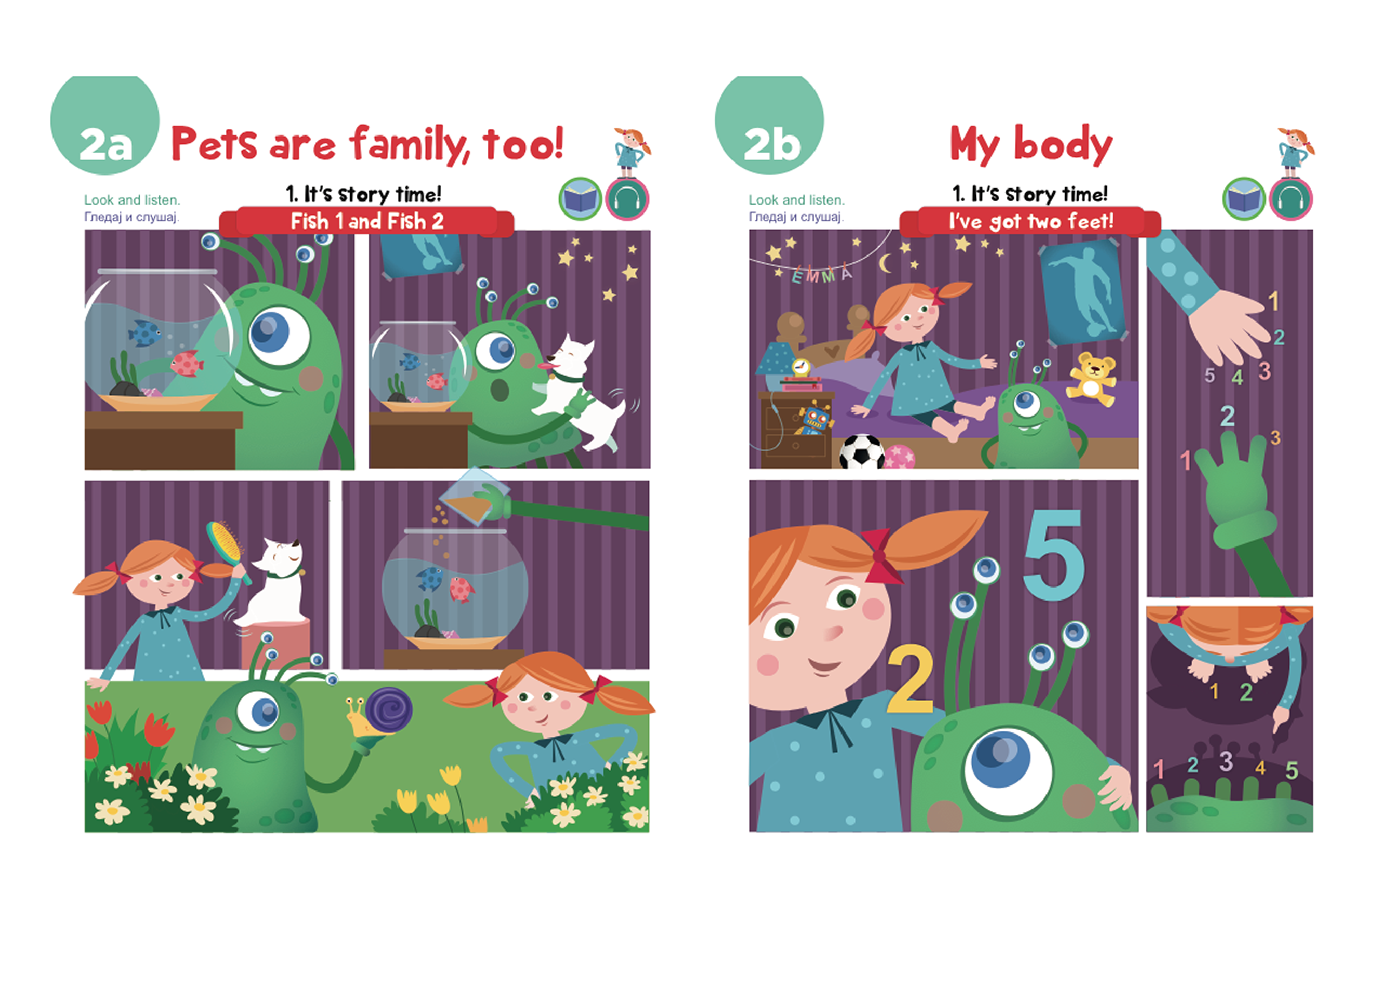 learning book children book english book emma and zap nasa kuca znanja gender neutral ILLUSTRATION  Character design  storytelling  